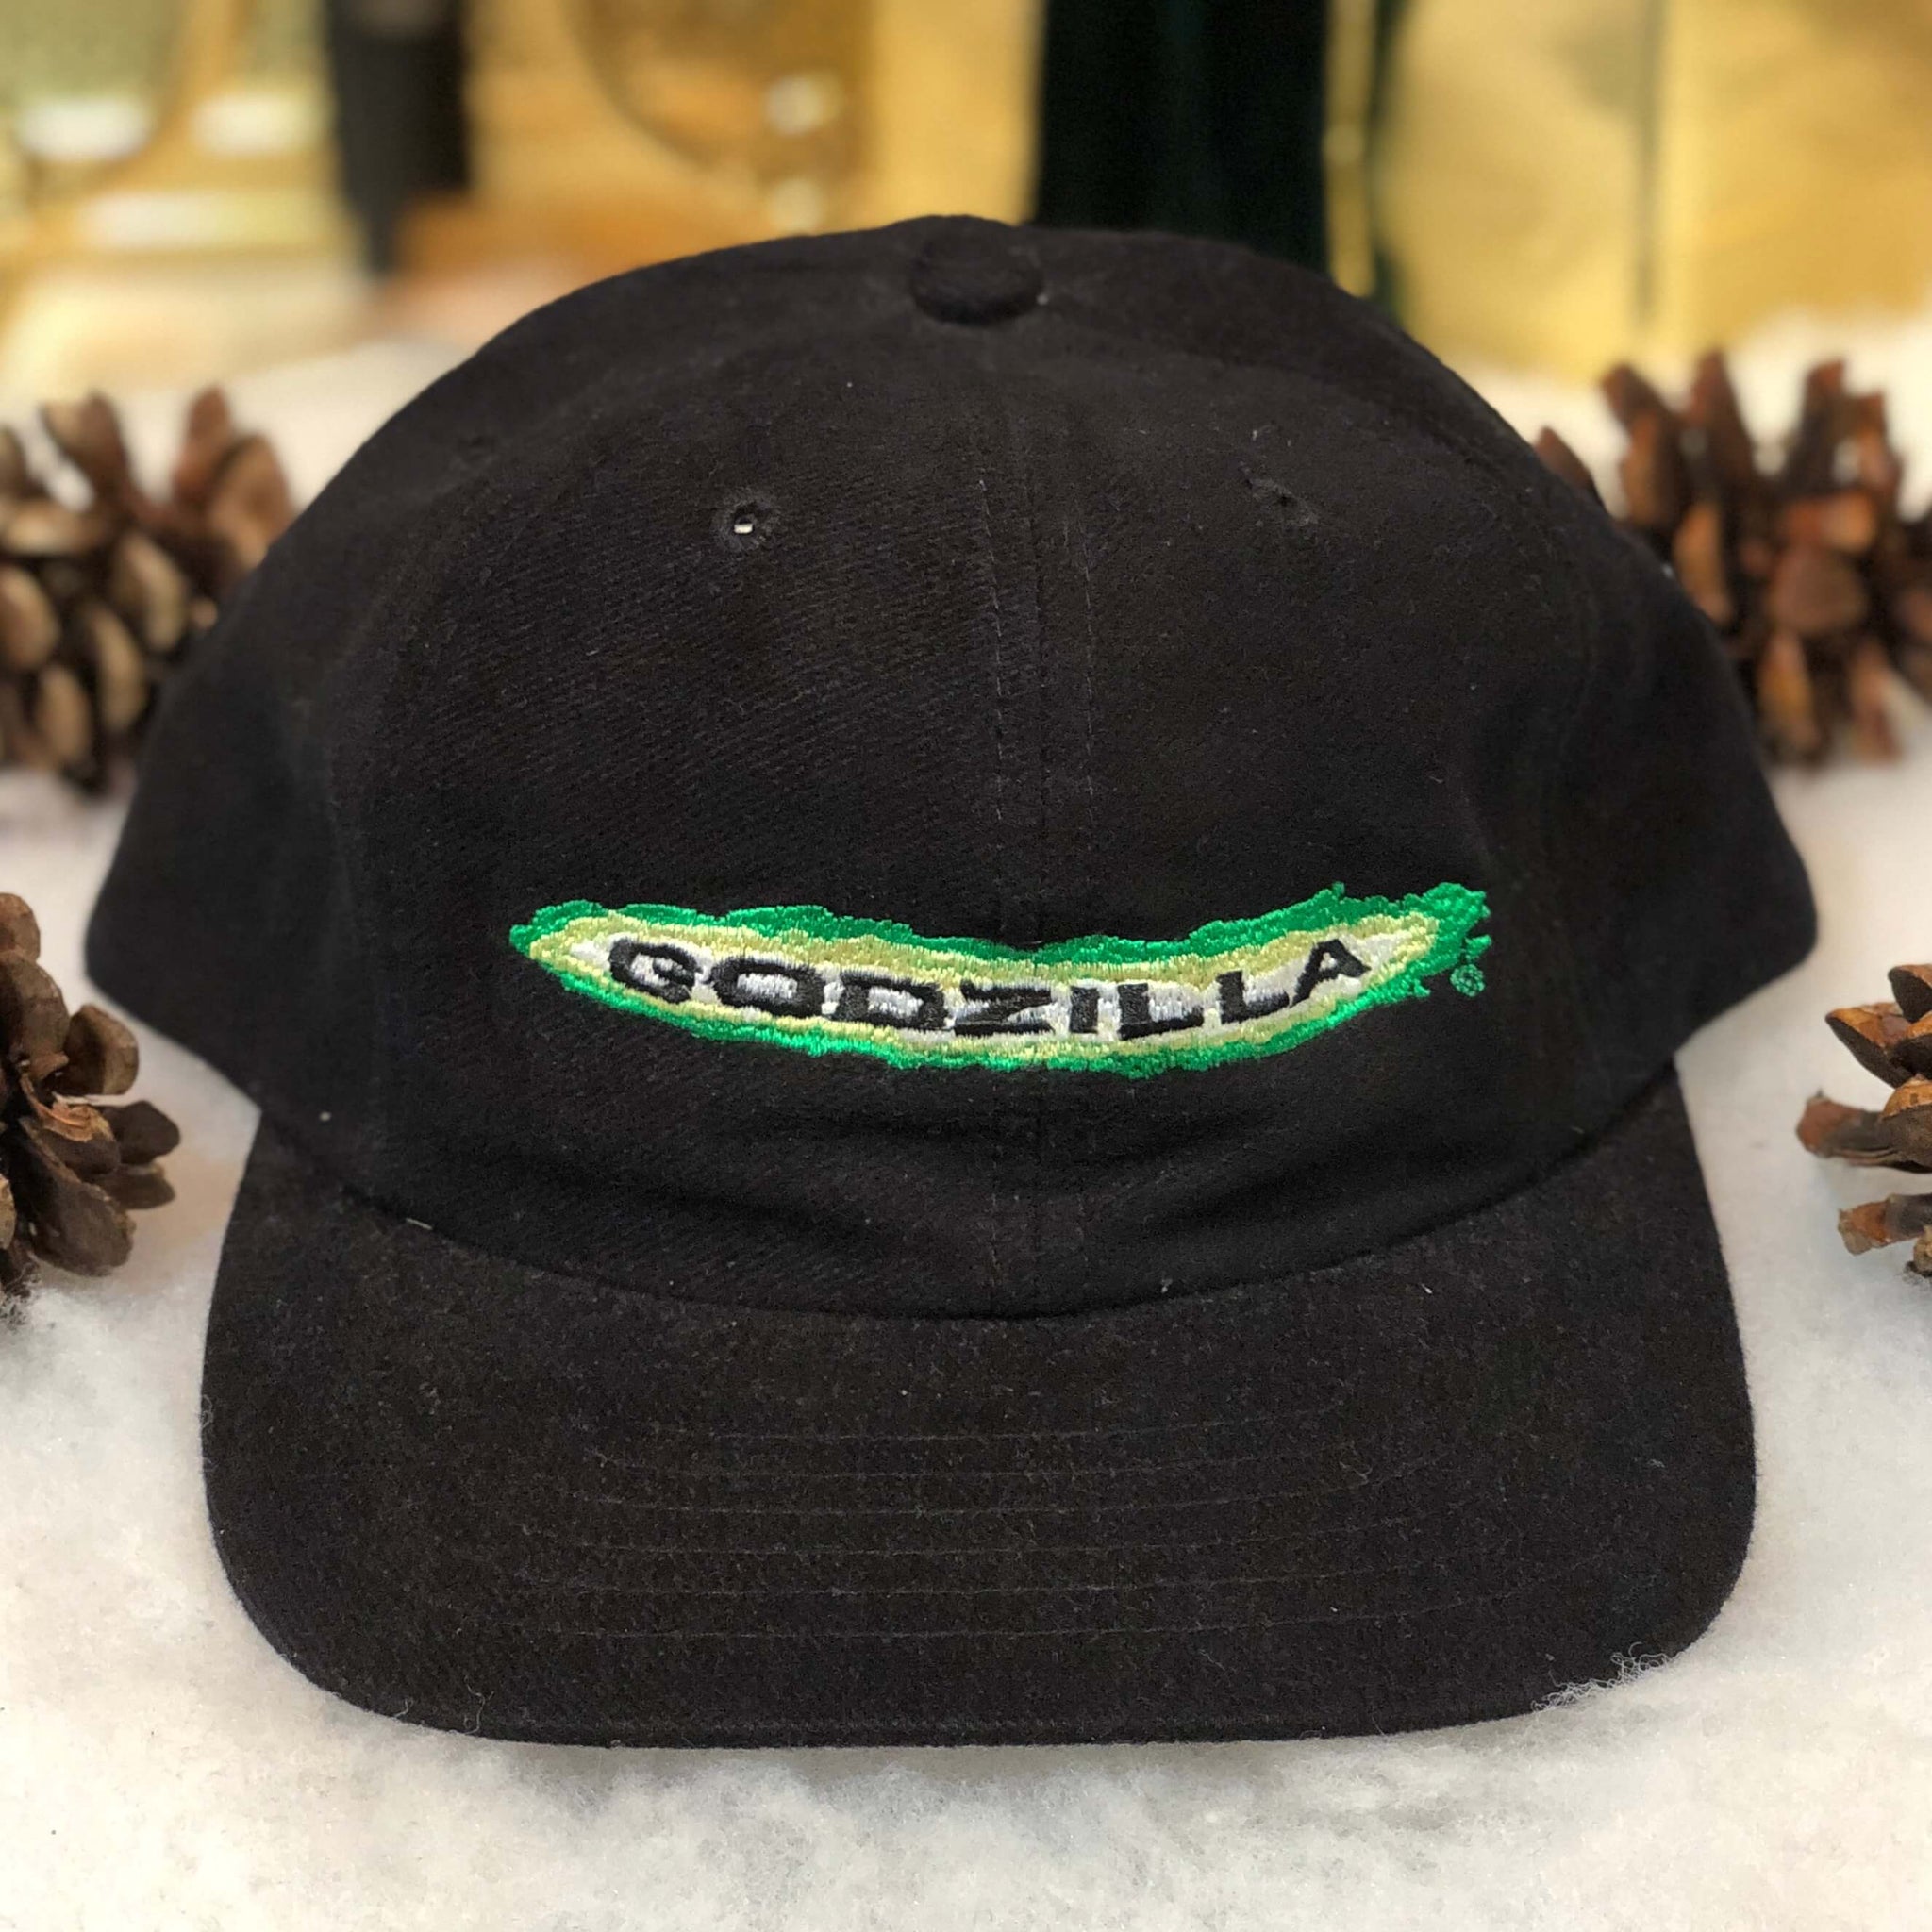 Vintage Godzilla "Size Does Matter" Headmost Snapback Hat